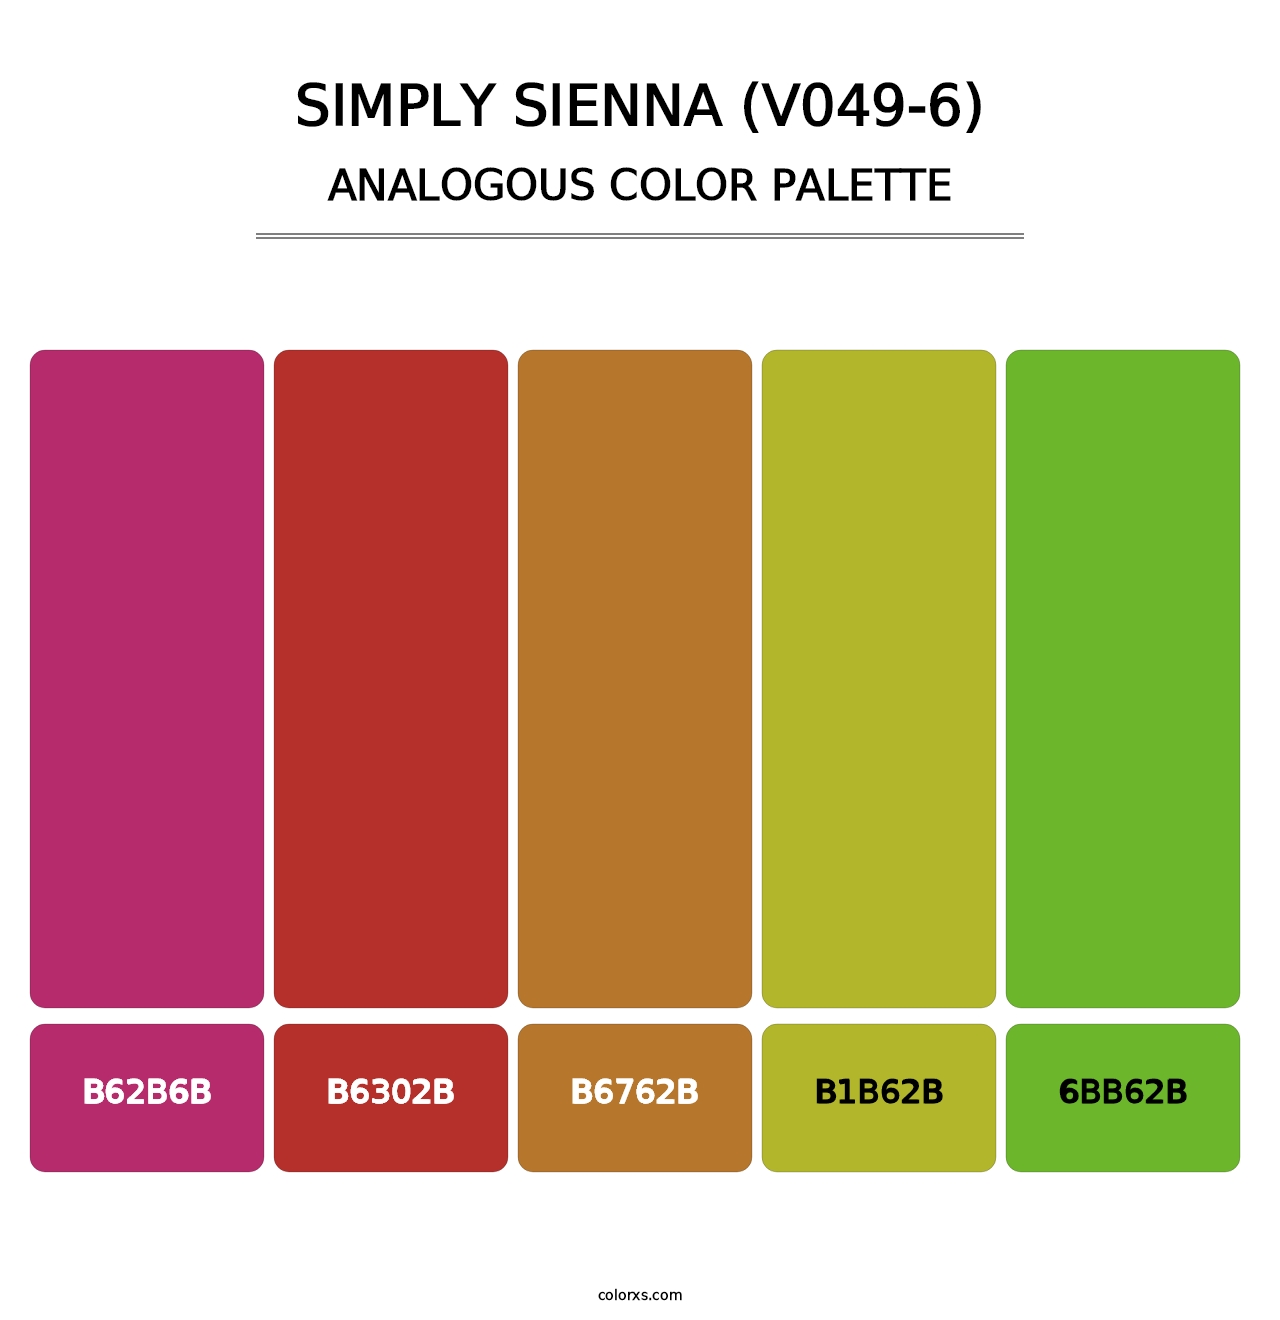 Simply Sienna (V049-6) - Analogous Color Palette